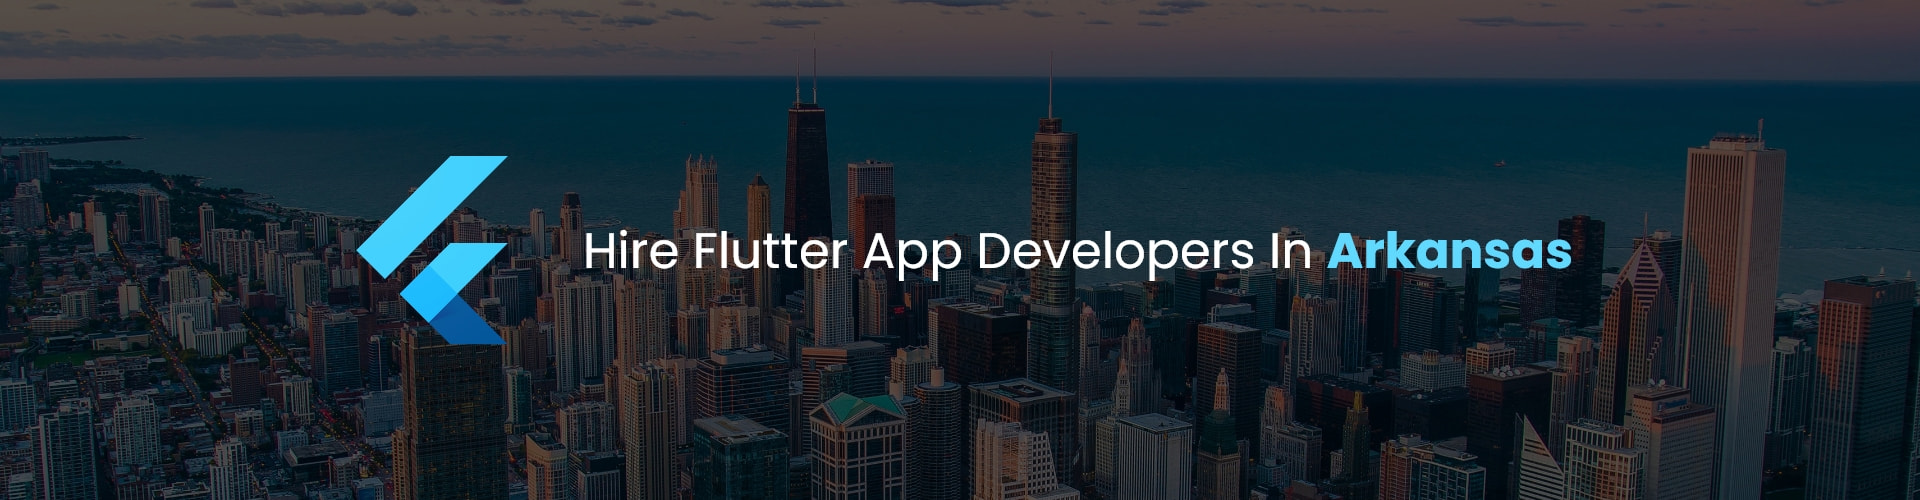 hire flutter app developers in arkansas